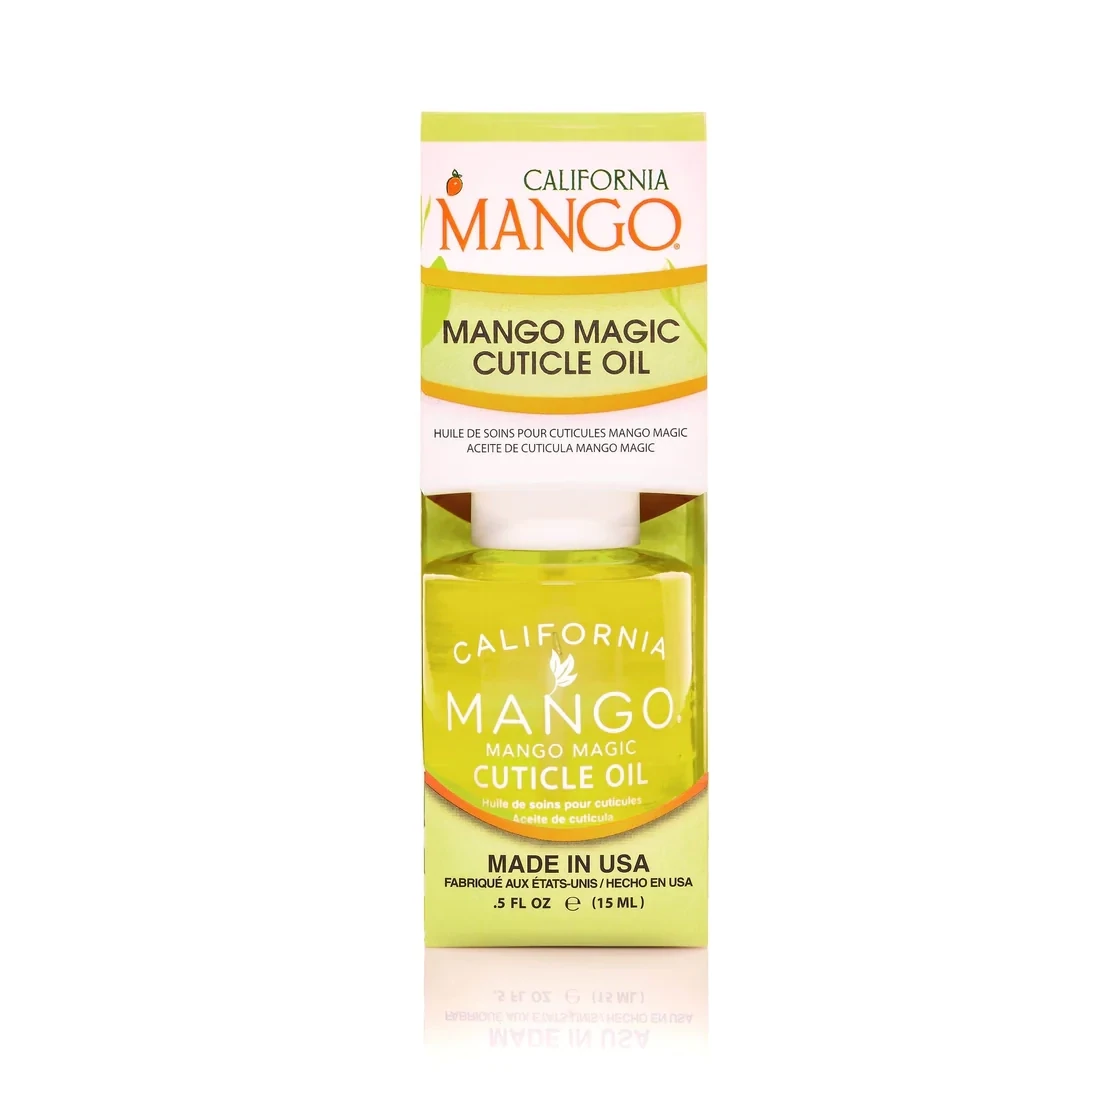 California Mango Mango Magic Cuticle Oil .5 fl oz 